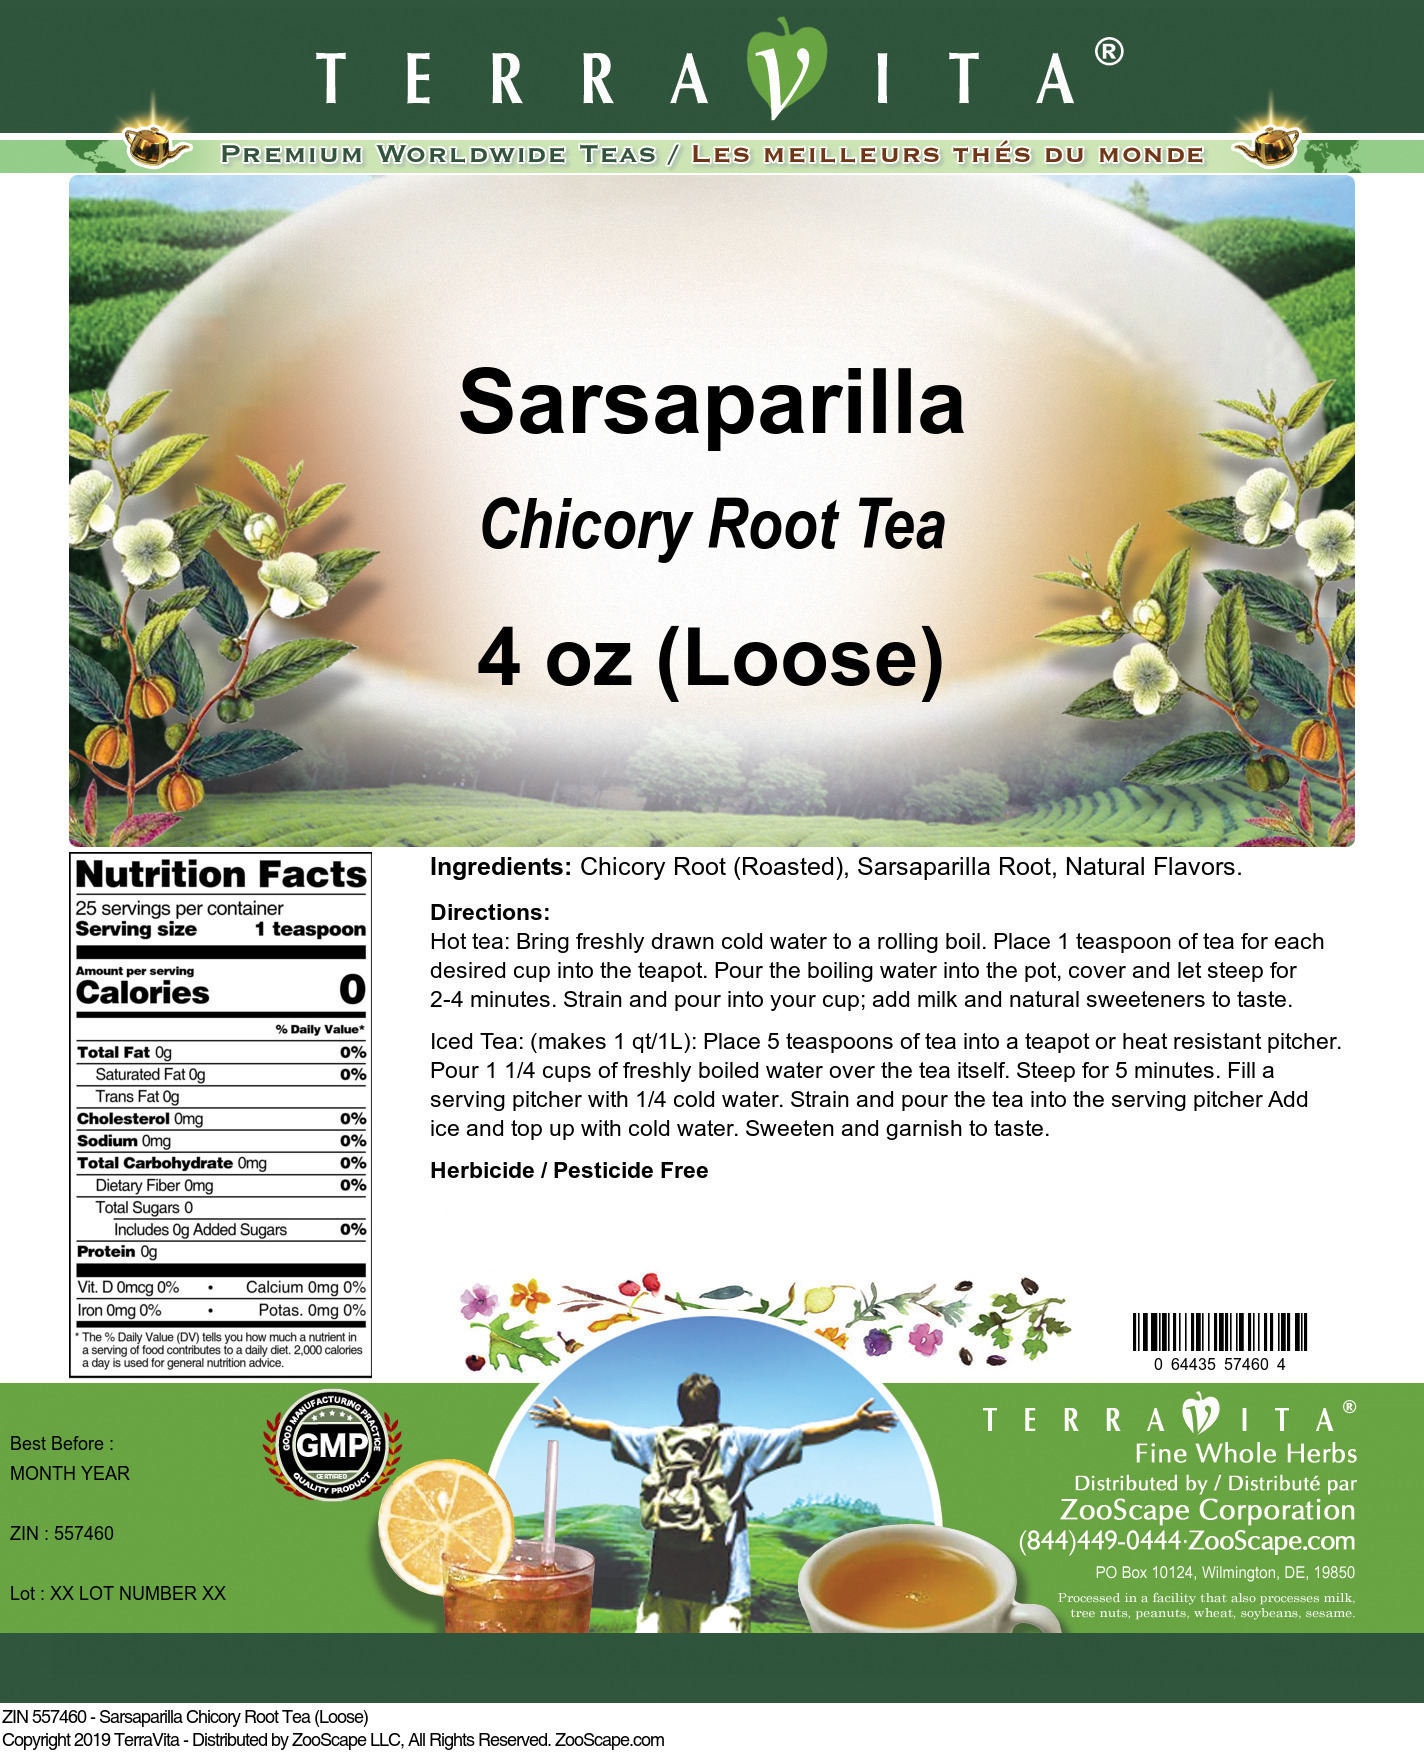 Sarsaparilla Chicory Root Tea (Loose) - Label